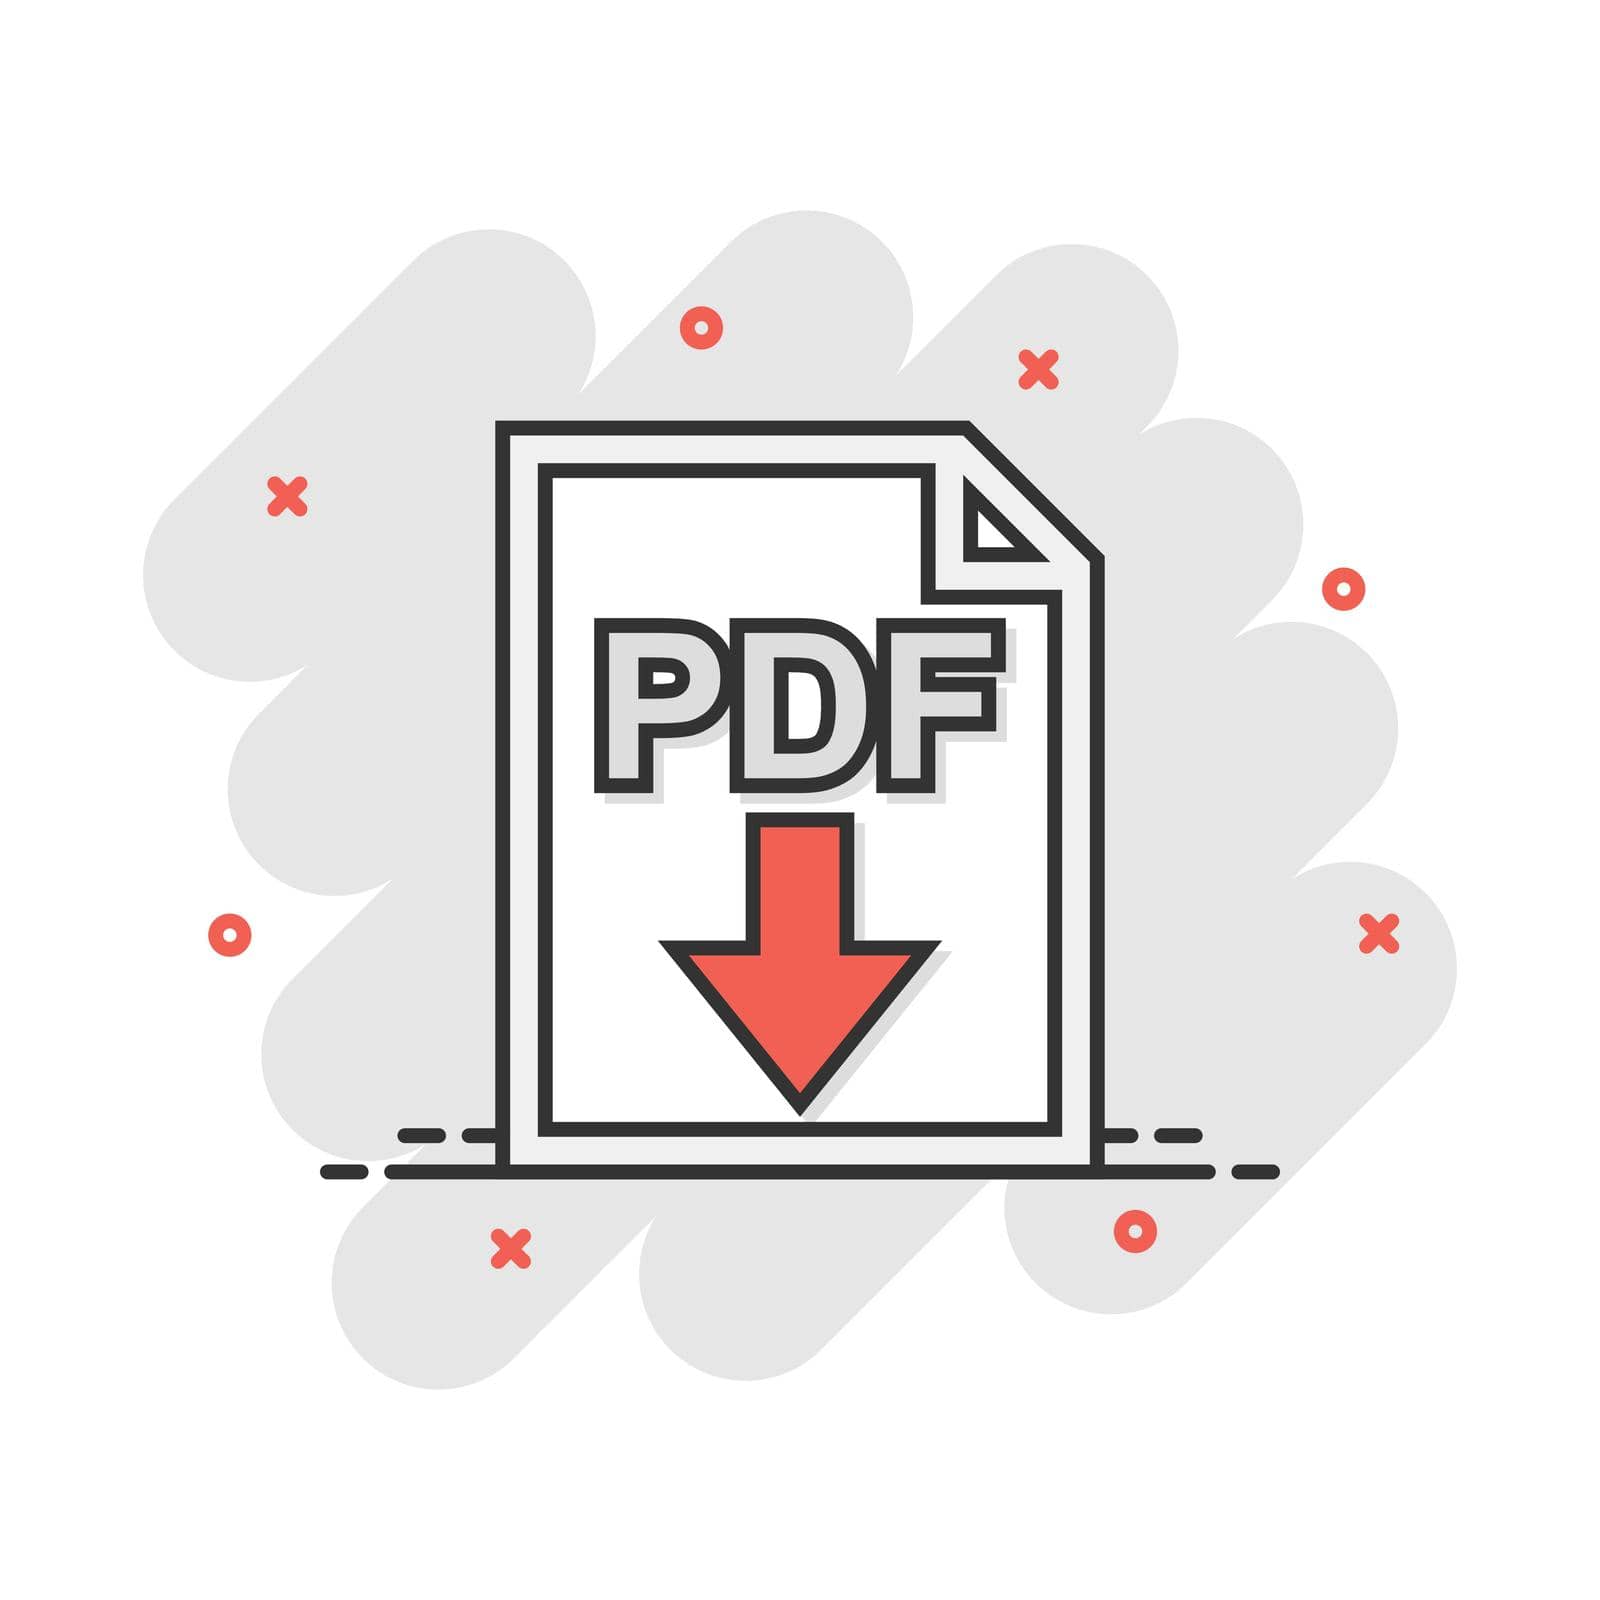 Cartoon PDF icon in comic style. Document illustration pictogram. File sign splash business concept.